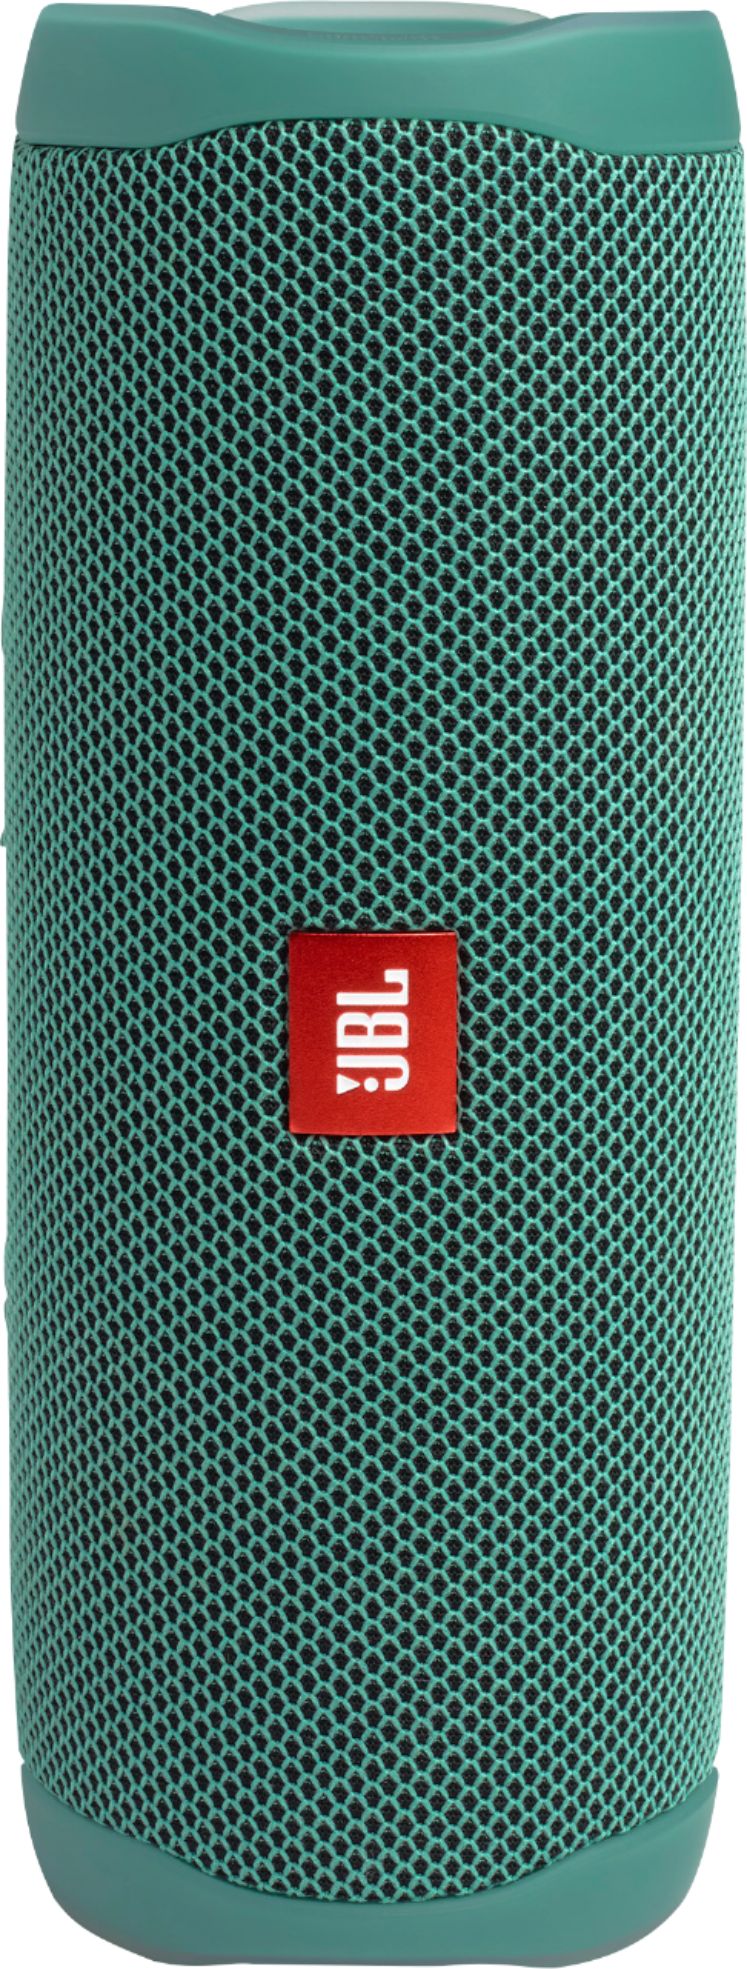 Best Buy: JBL Flip 5 Eco Portable Bluetooth Speaker Green 